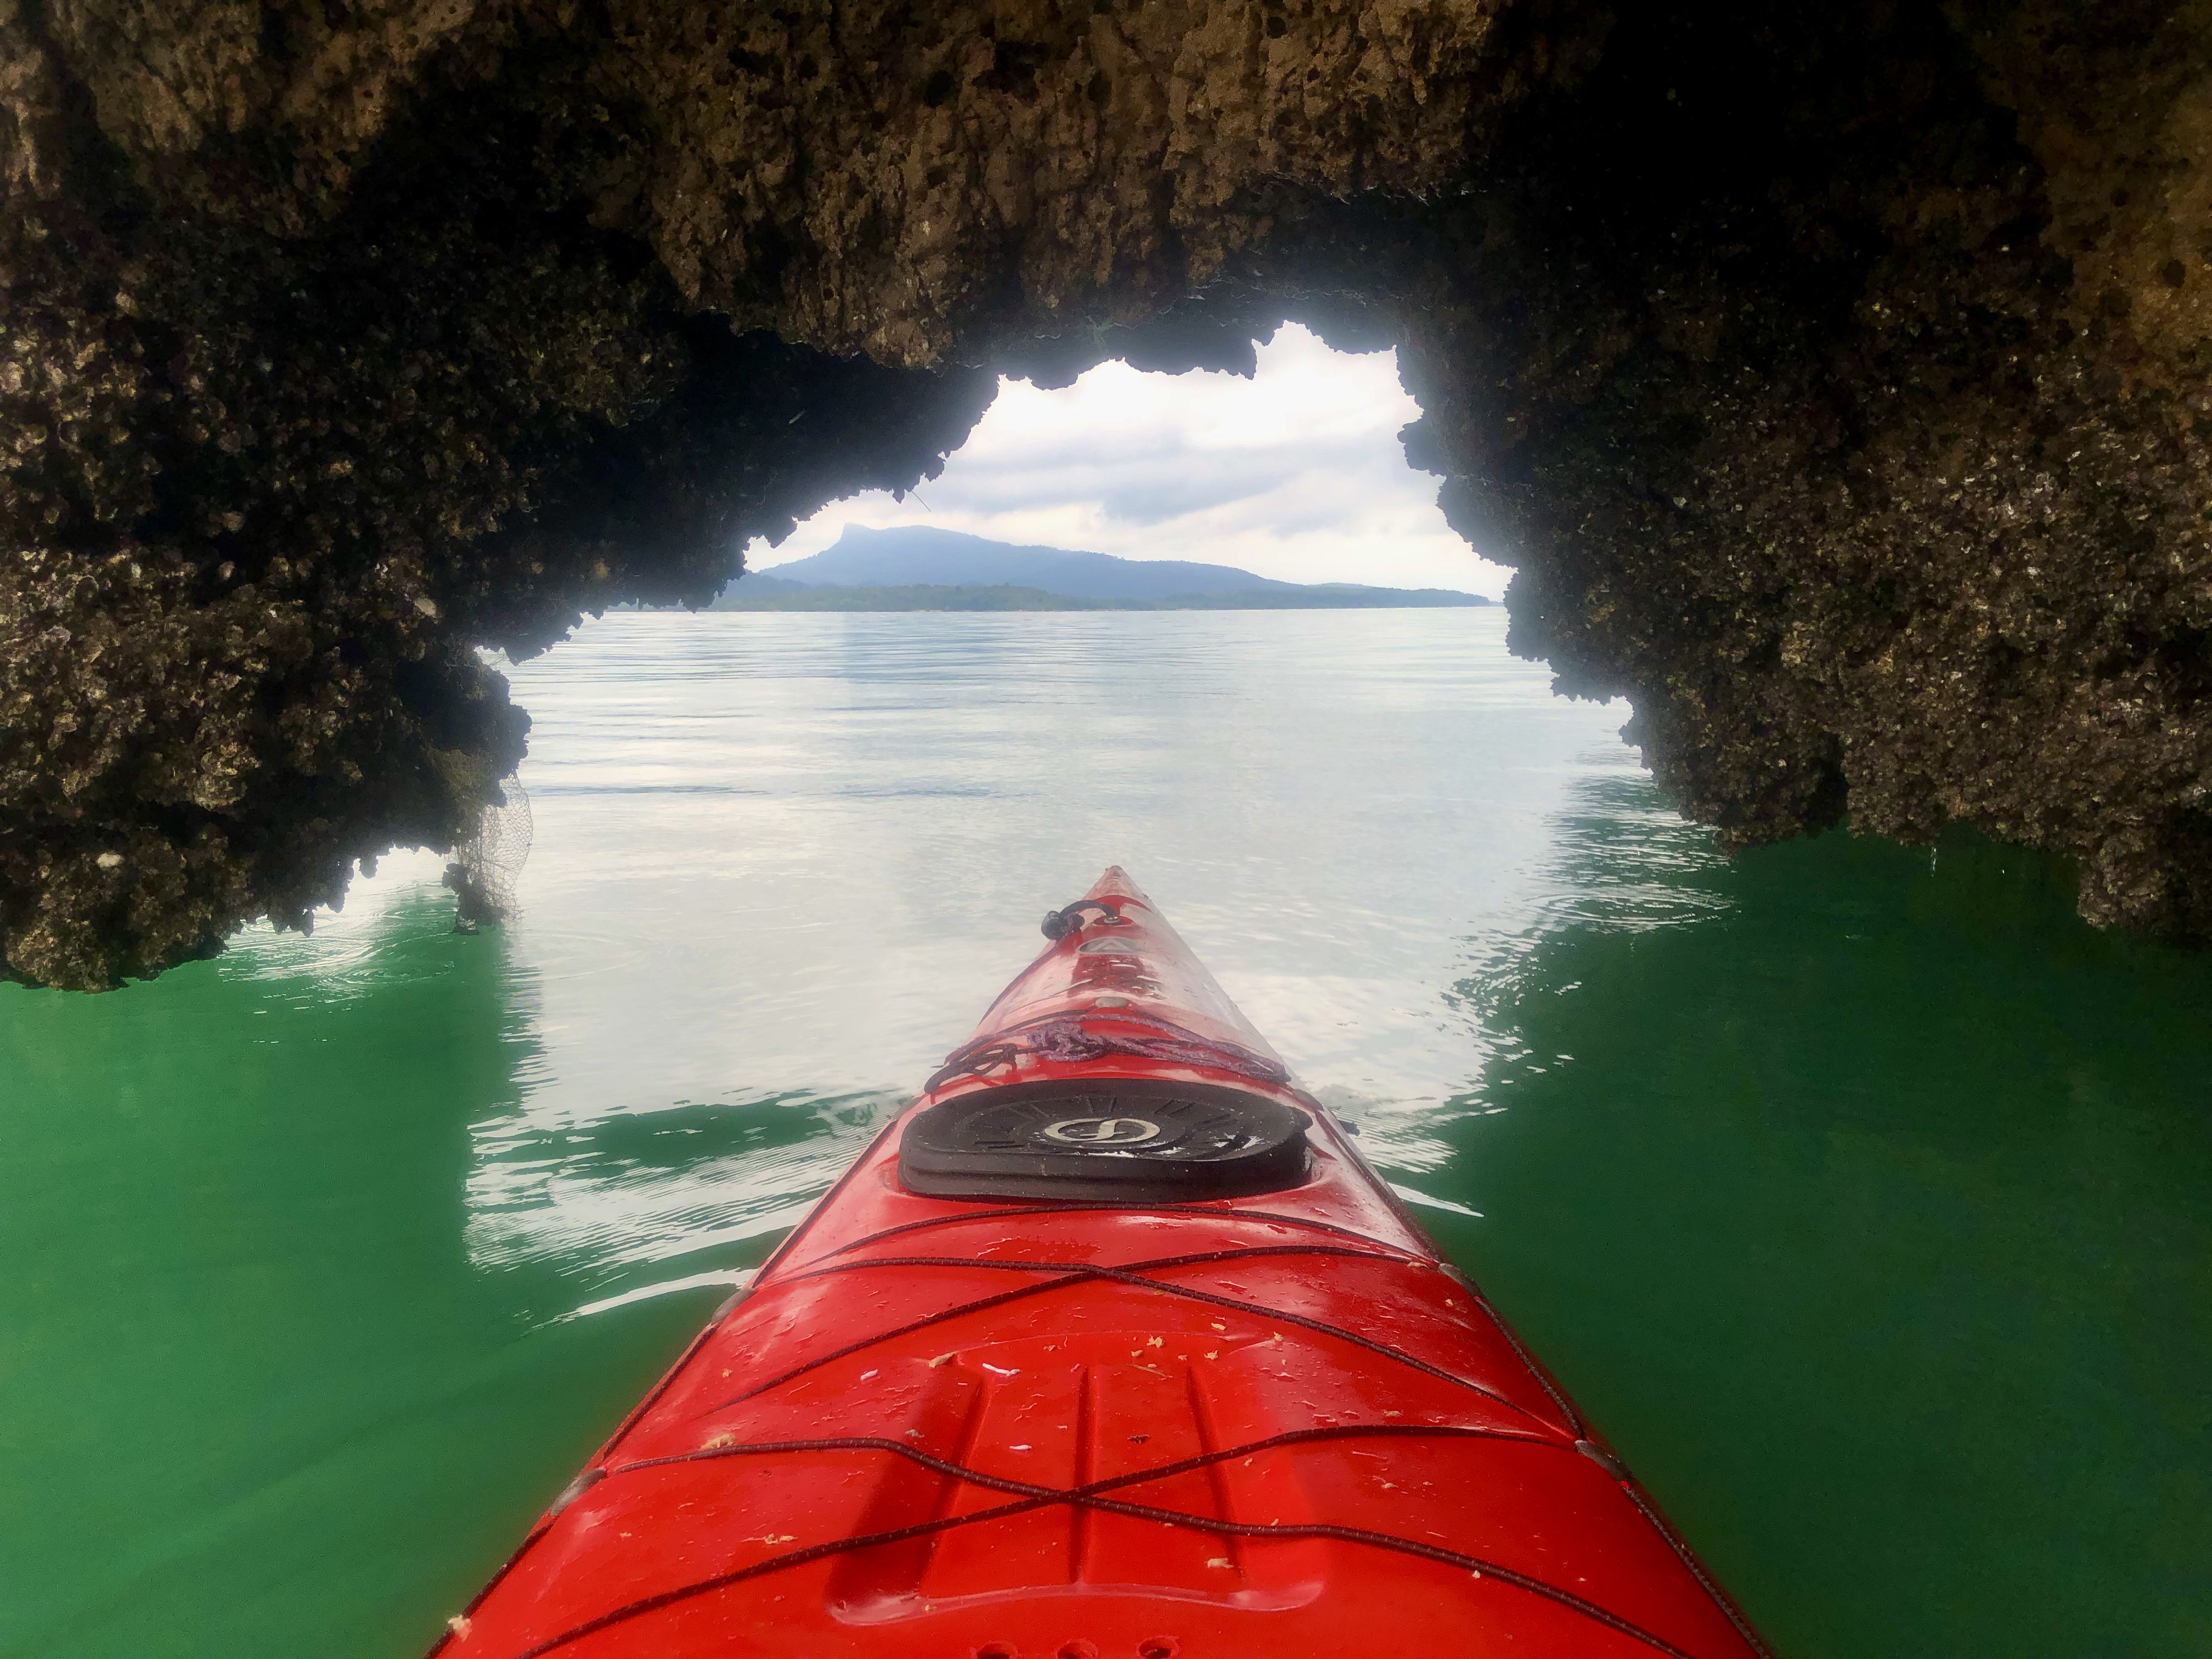 Caves honeycomb the base of karst rock formations at Phang Nga Bay, and many can be explored by kayak. Photo: Ian Neubauer